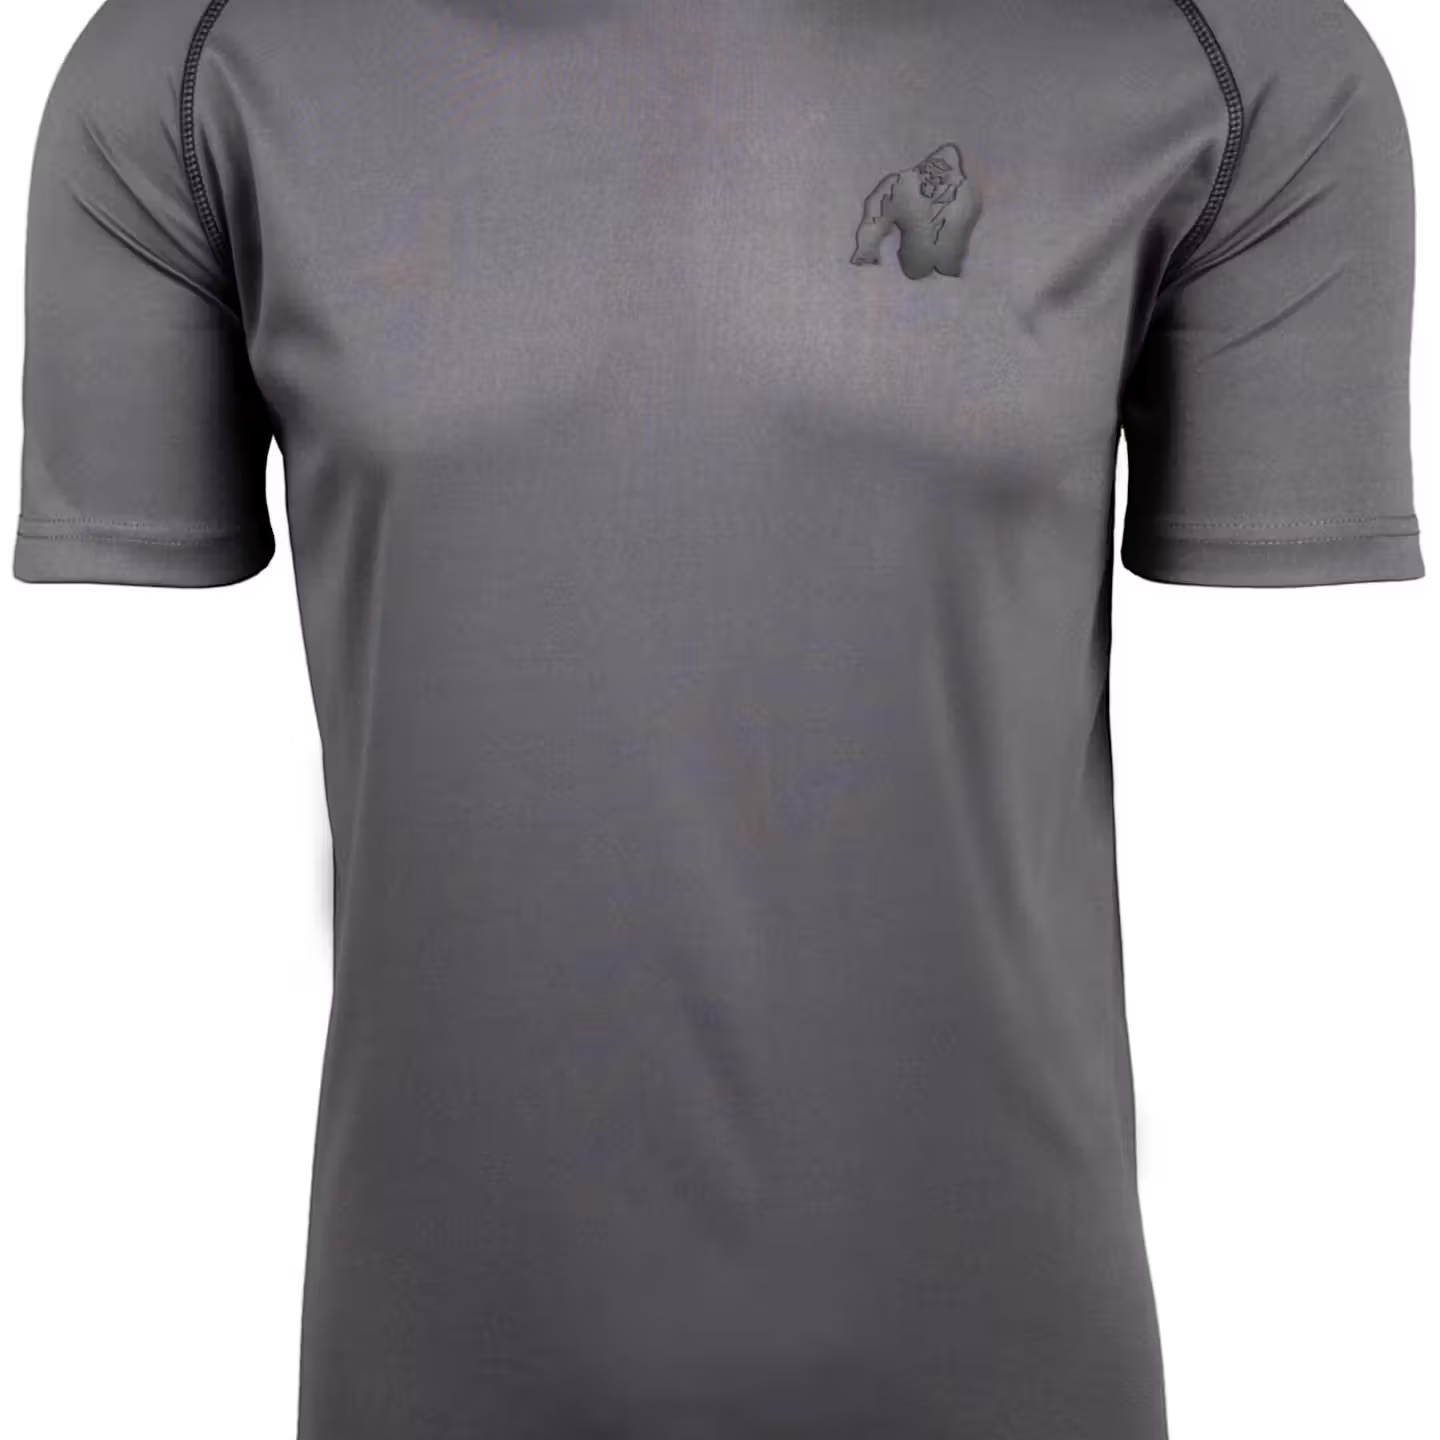 Gorilla Wear - Performance T-shirt, grey